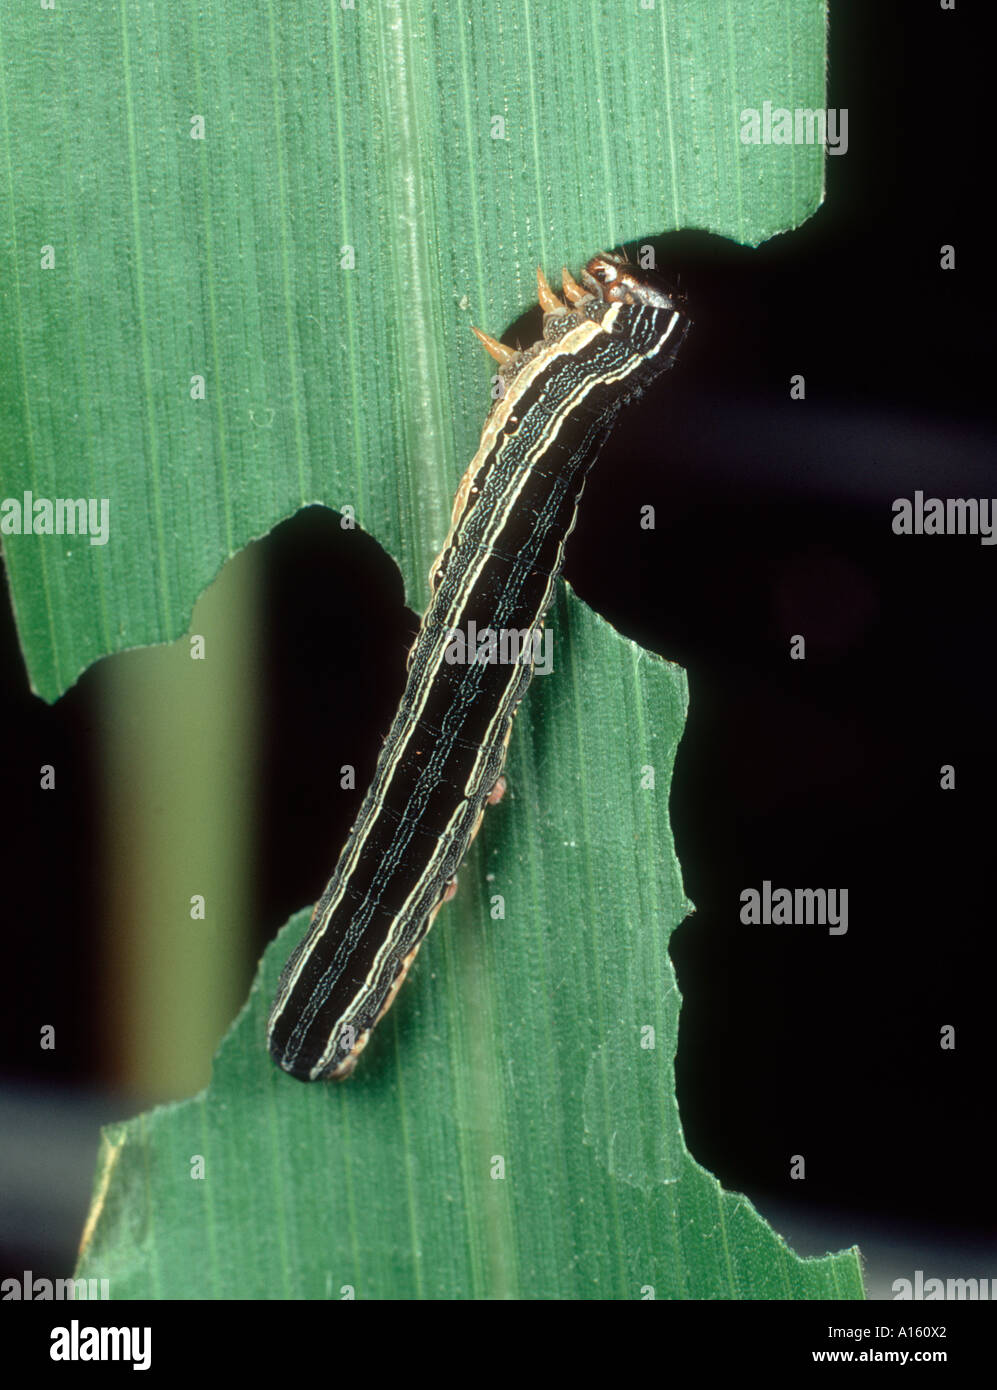 African armyworm Spodoptera exempta feeding on damaged maize leaf Stock Photo